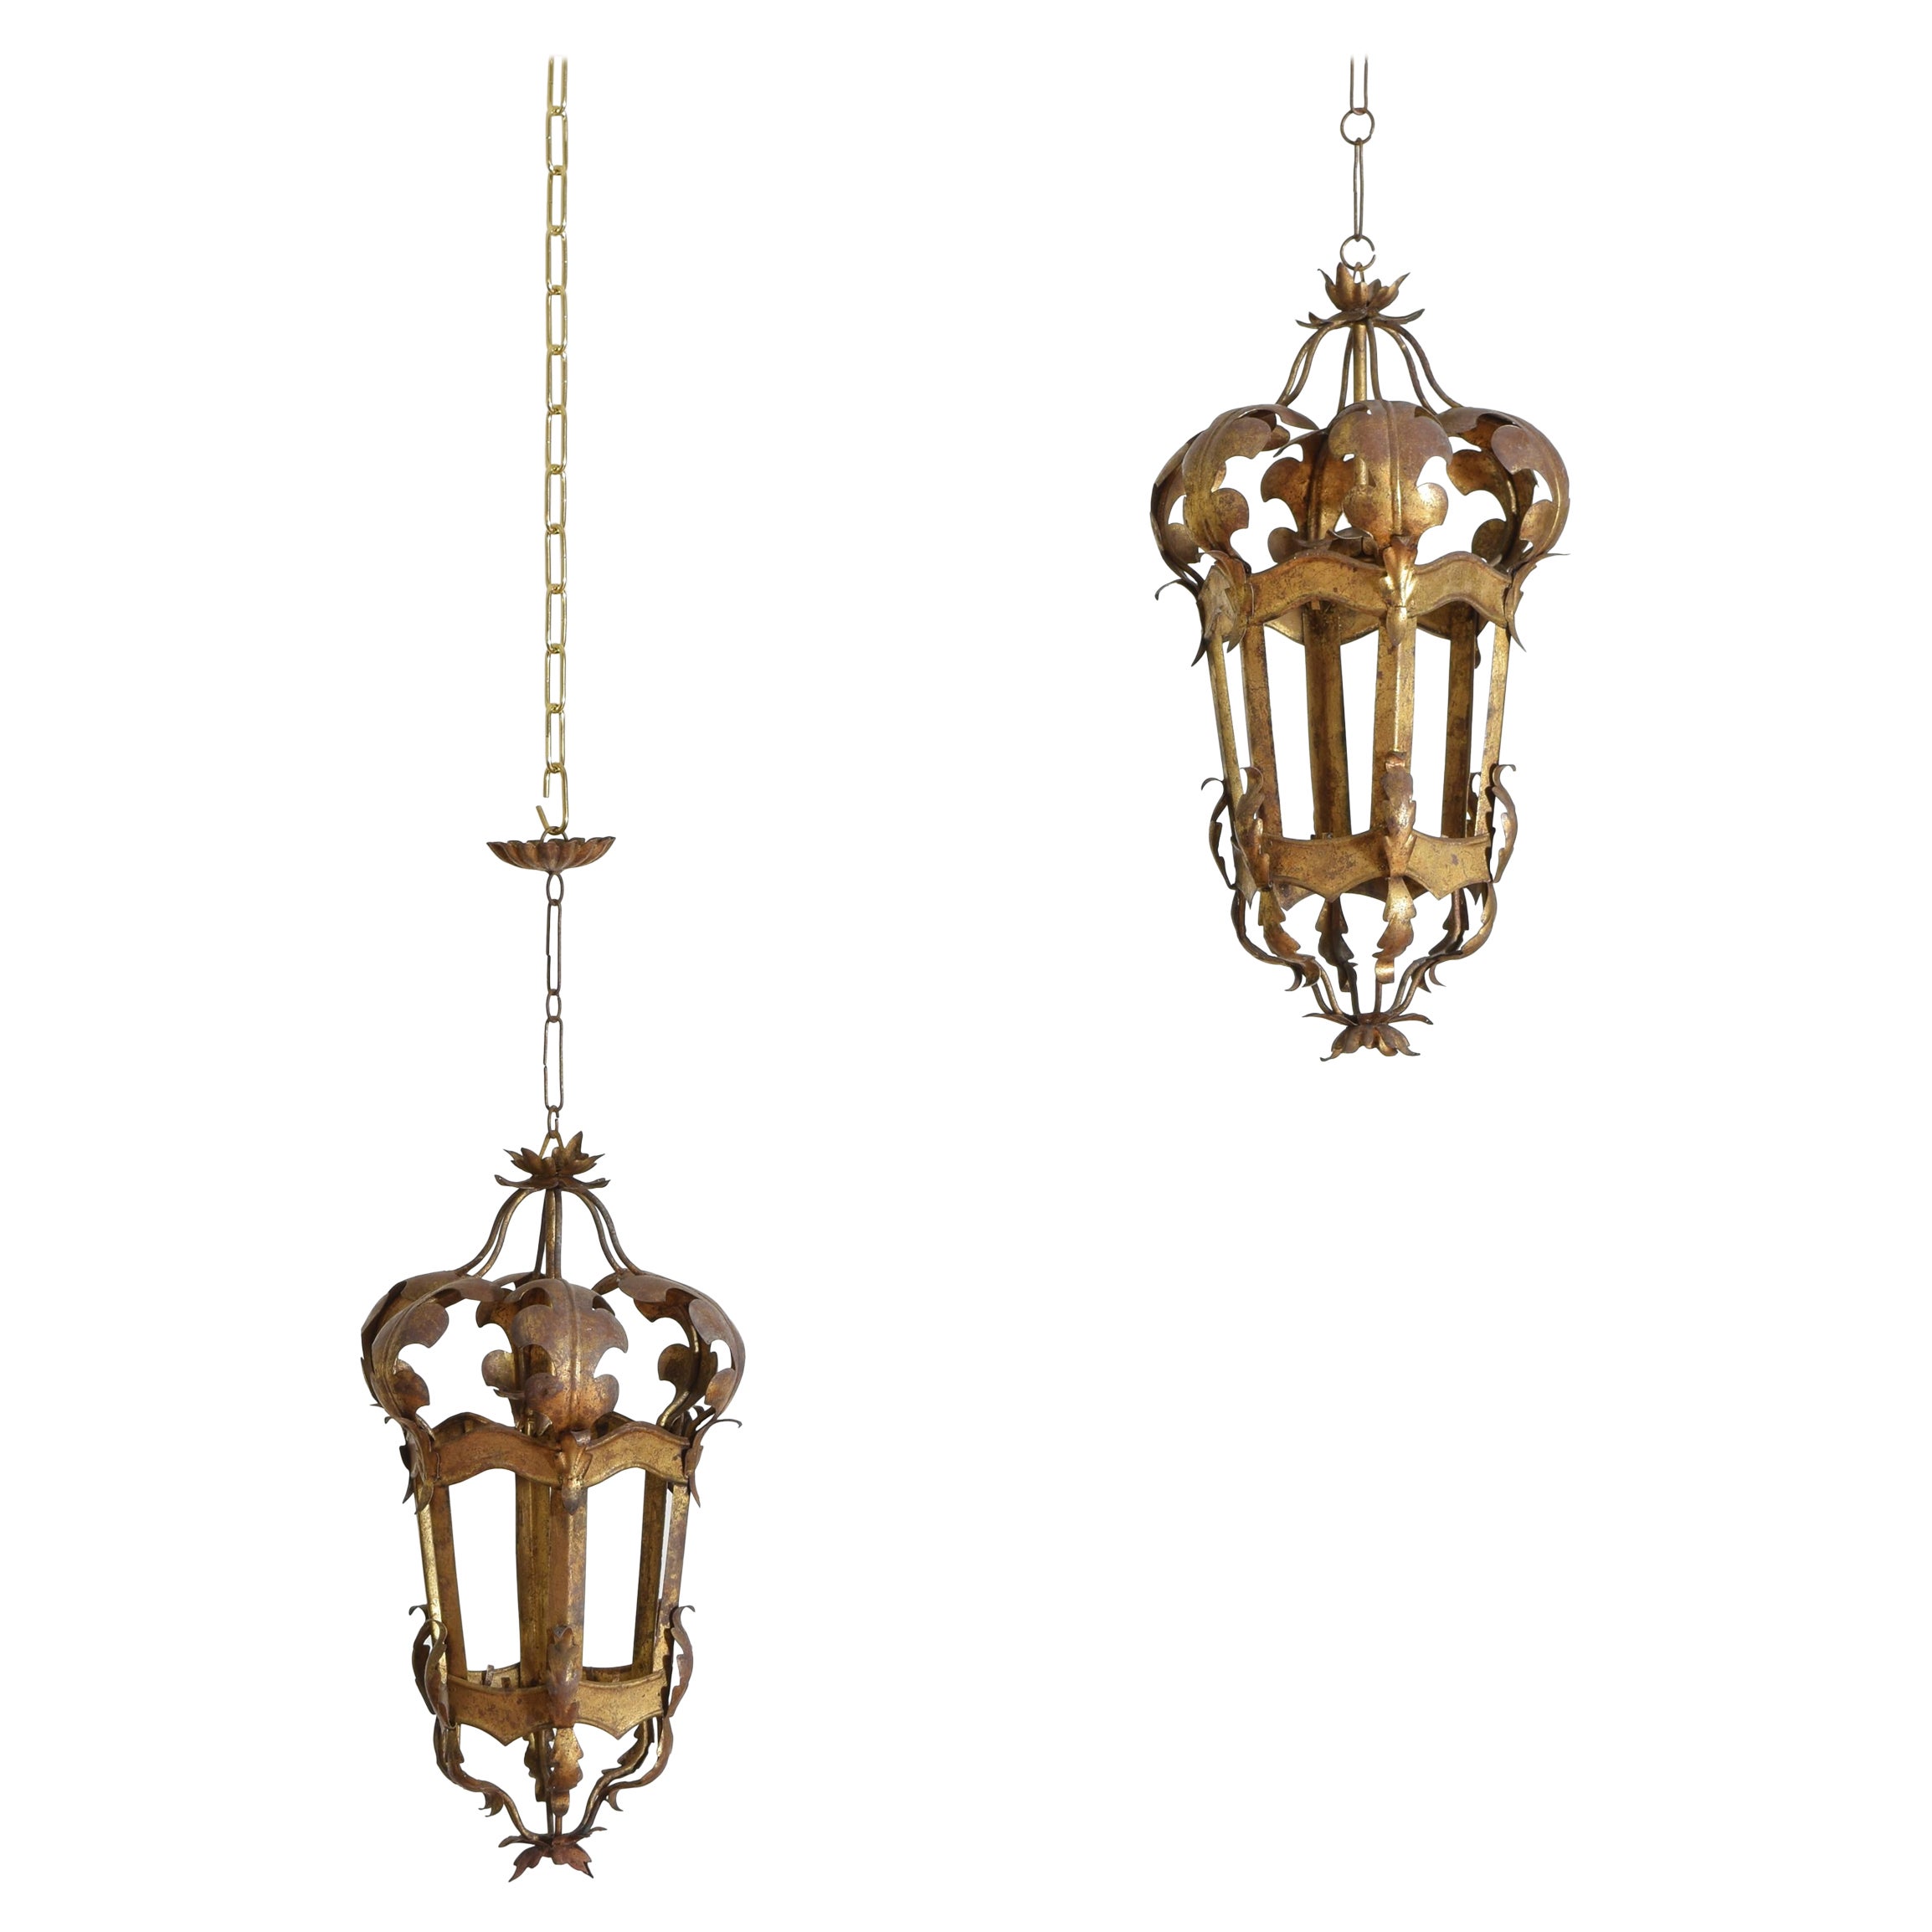 Italian Pair of Venetian Style Gilt Metal Gondola Lanterns